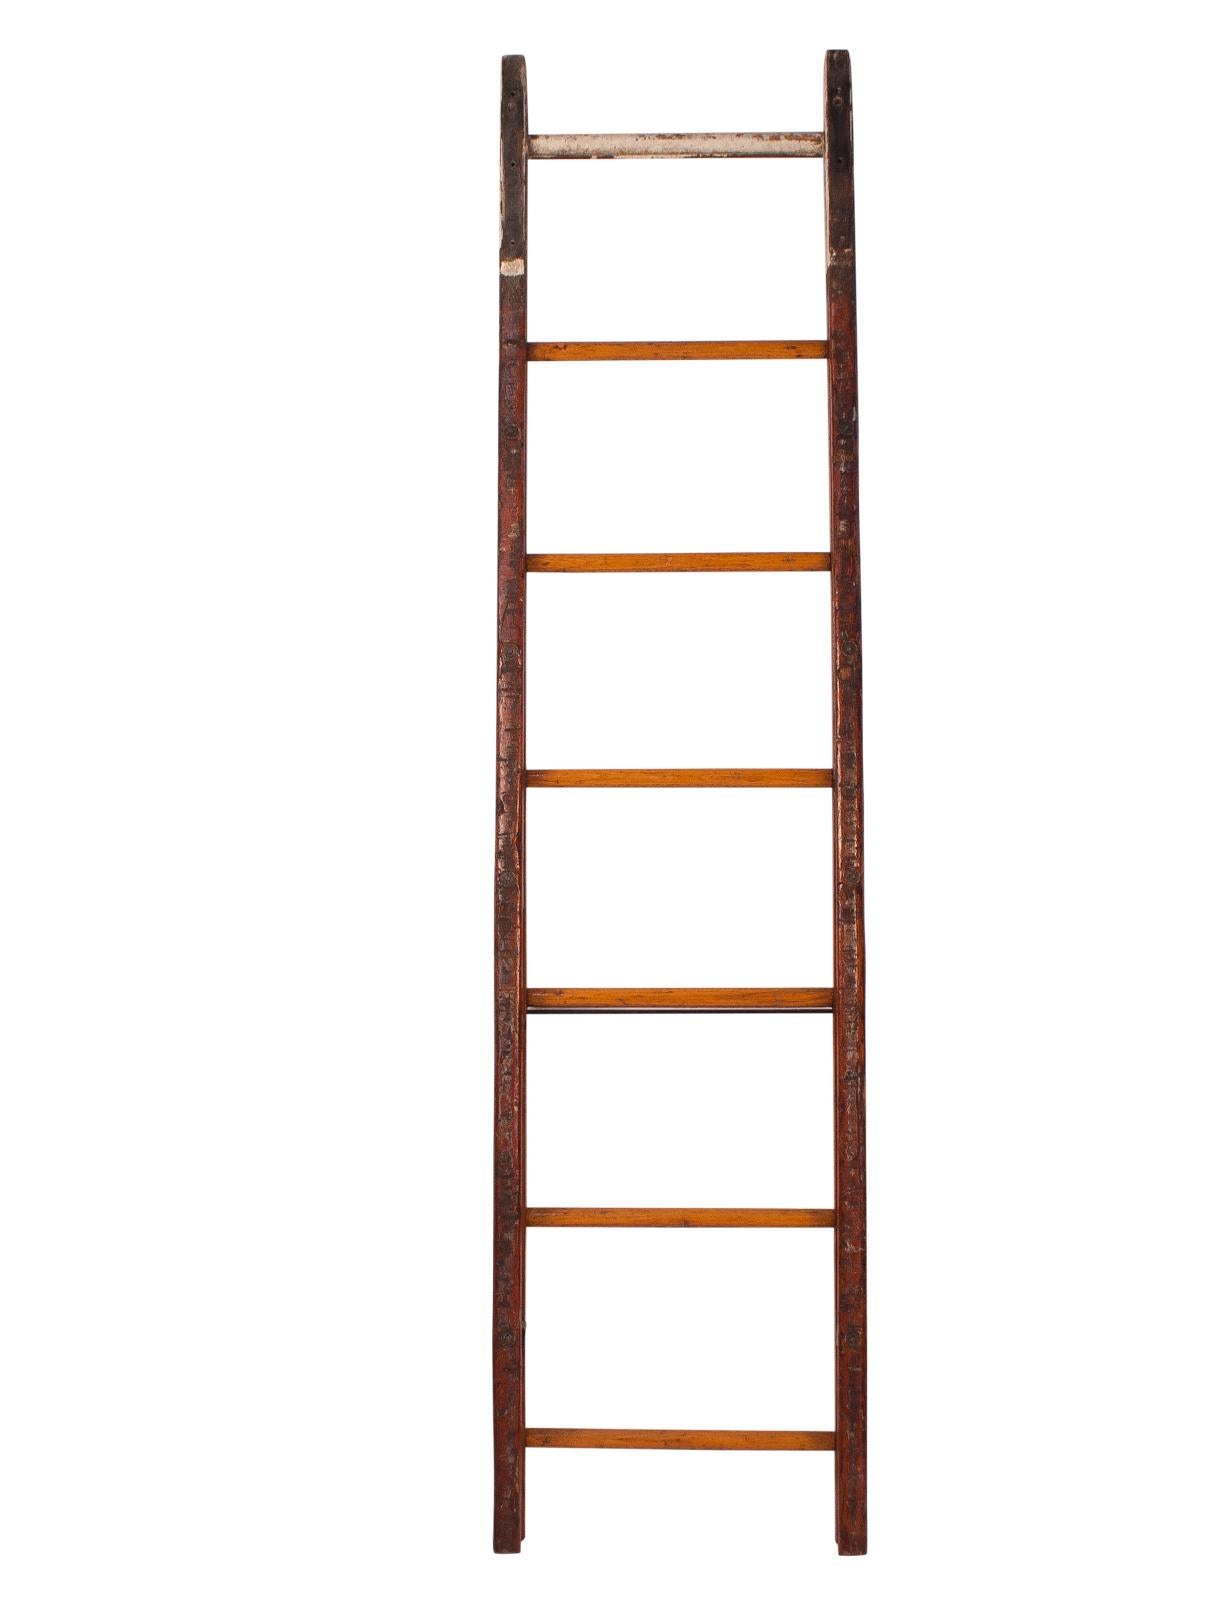 An early 20th century American fireman's ladder, circa 1900.